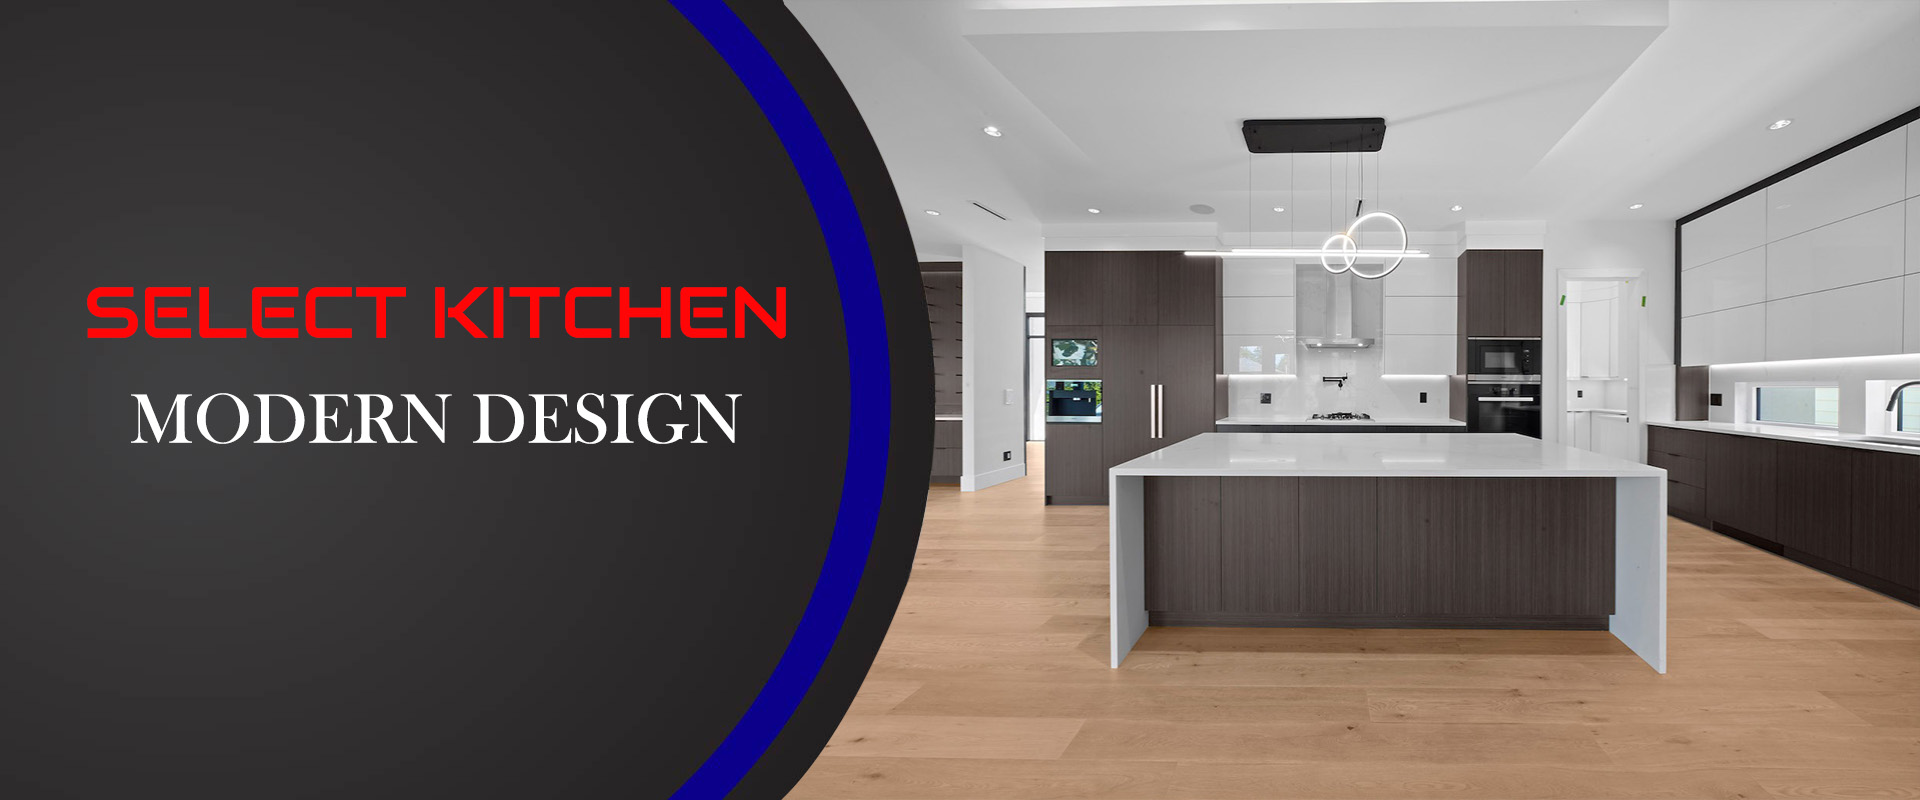 Select Kitchen Slide 6.jpg